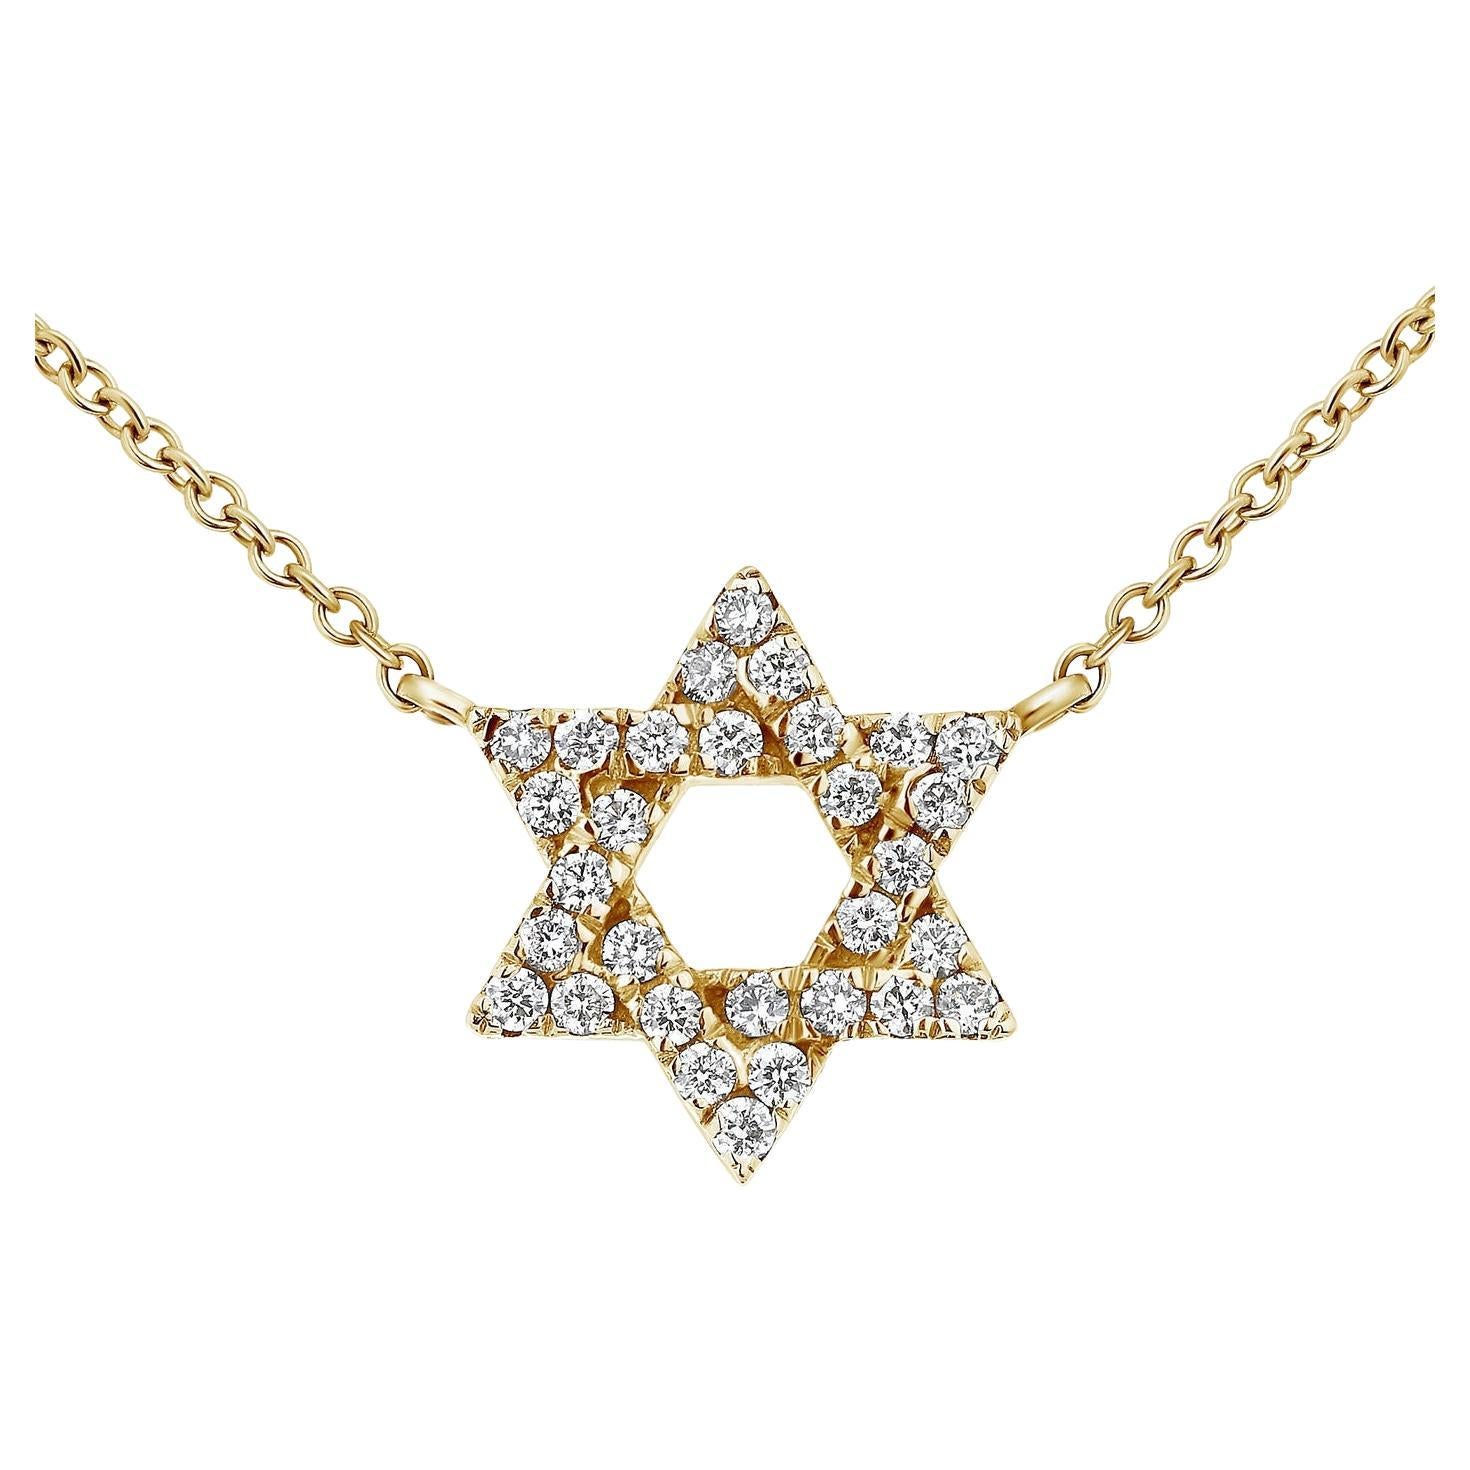 0.18 Carat Diamond Star of David Pendant Necklace in 14 Karat Yellow Gold